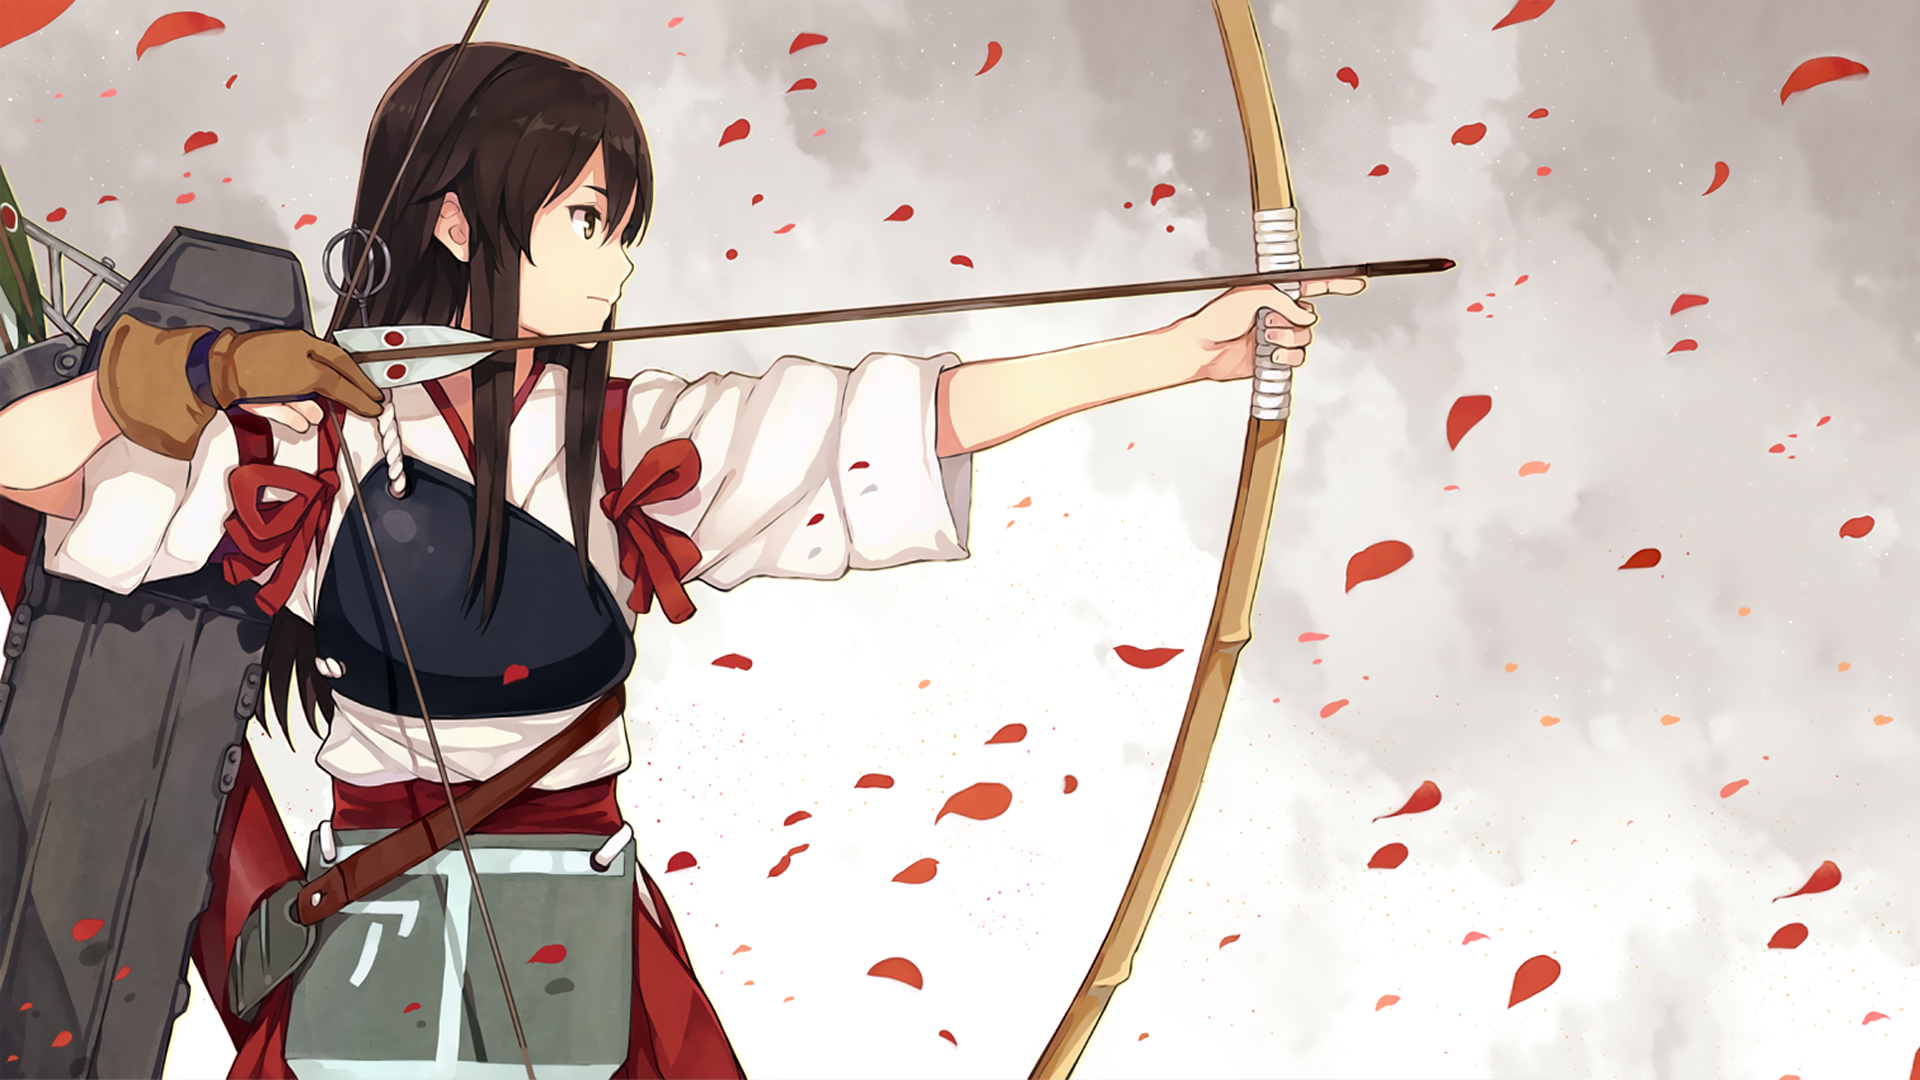 Anime 1920x1080 Kantai Collection anime girls archer bow arrows anime bow and arrow girls with guns aiming brunette long hair